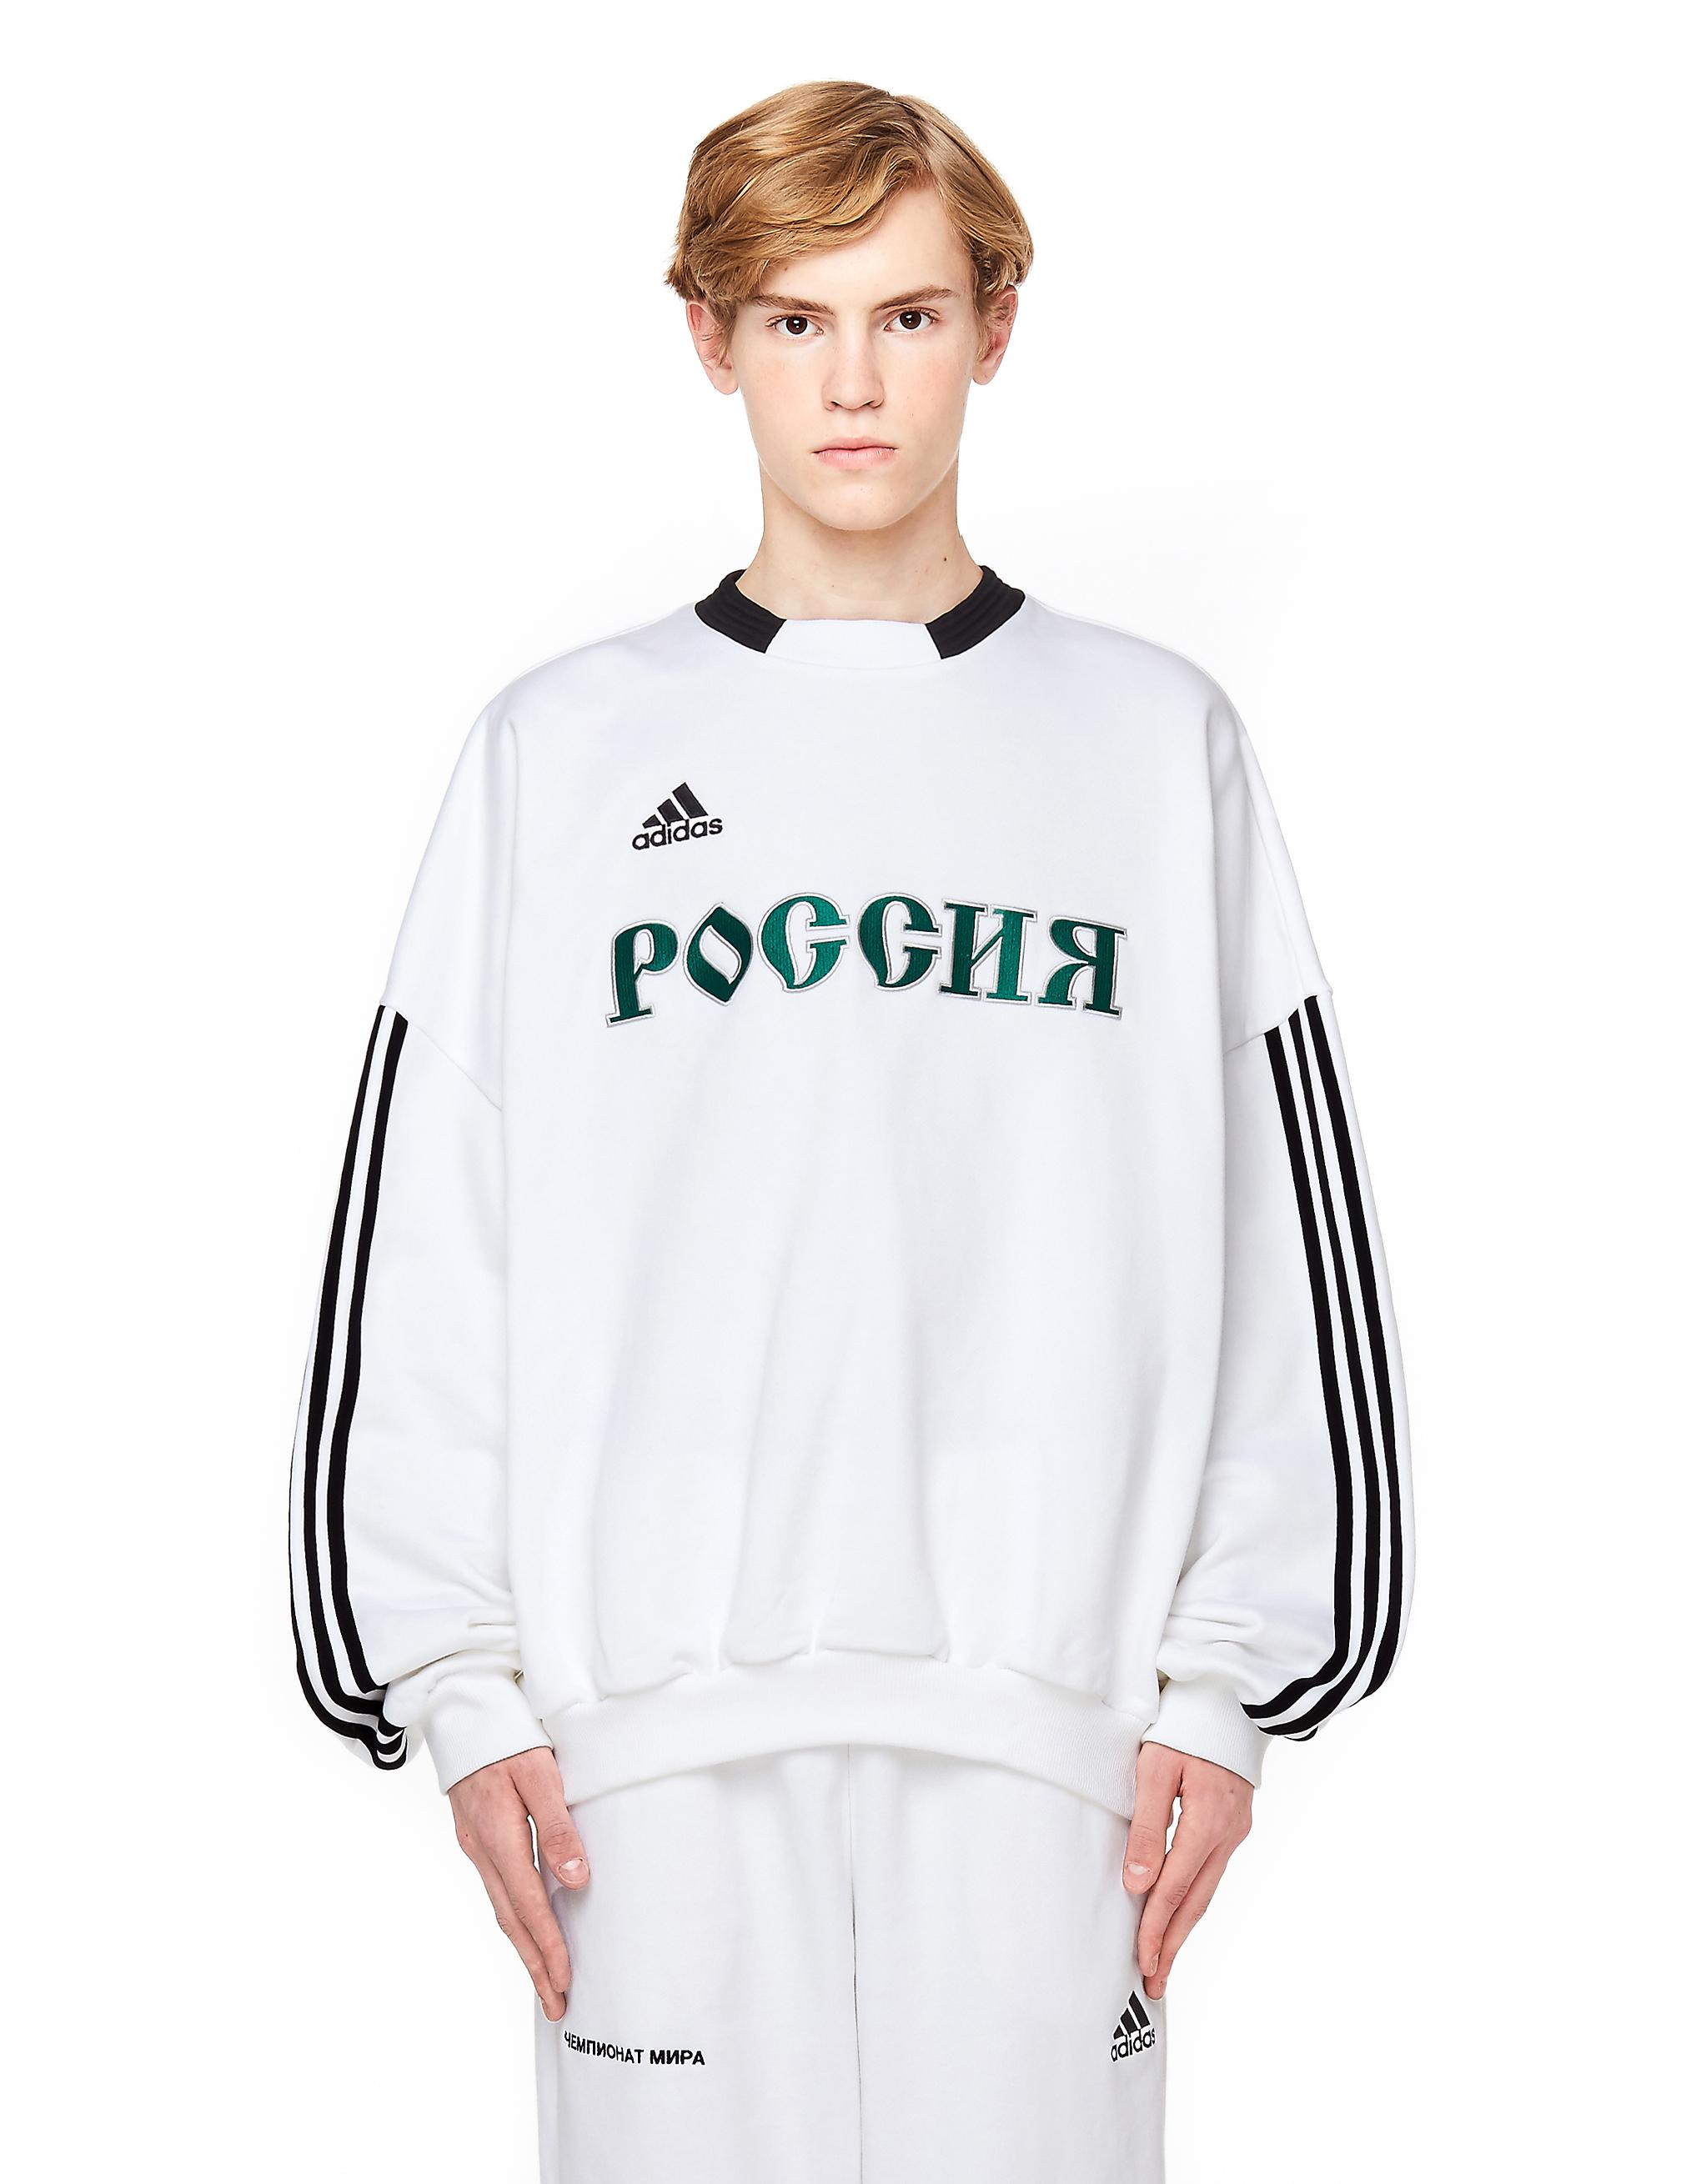 Gosha Rubchinskiy Sweater Adidas Online, SAVE 58% - mpgc.net